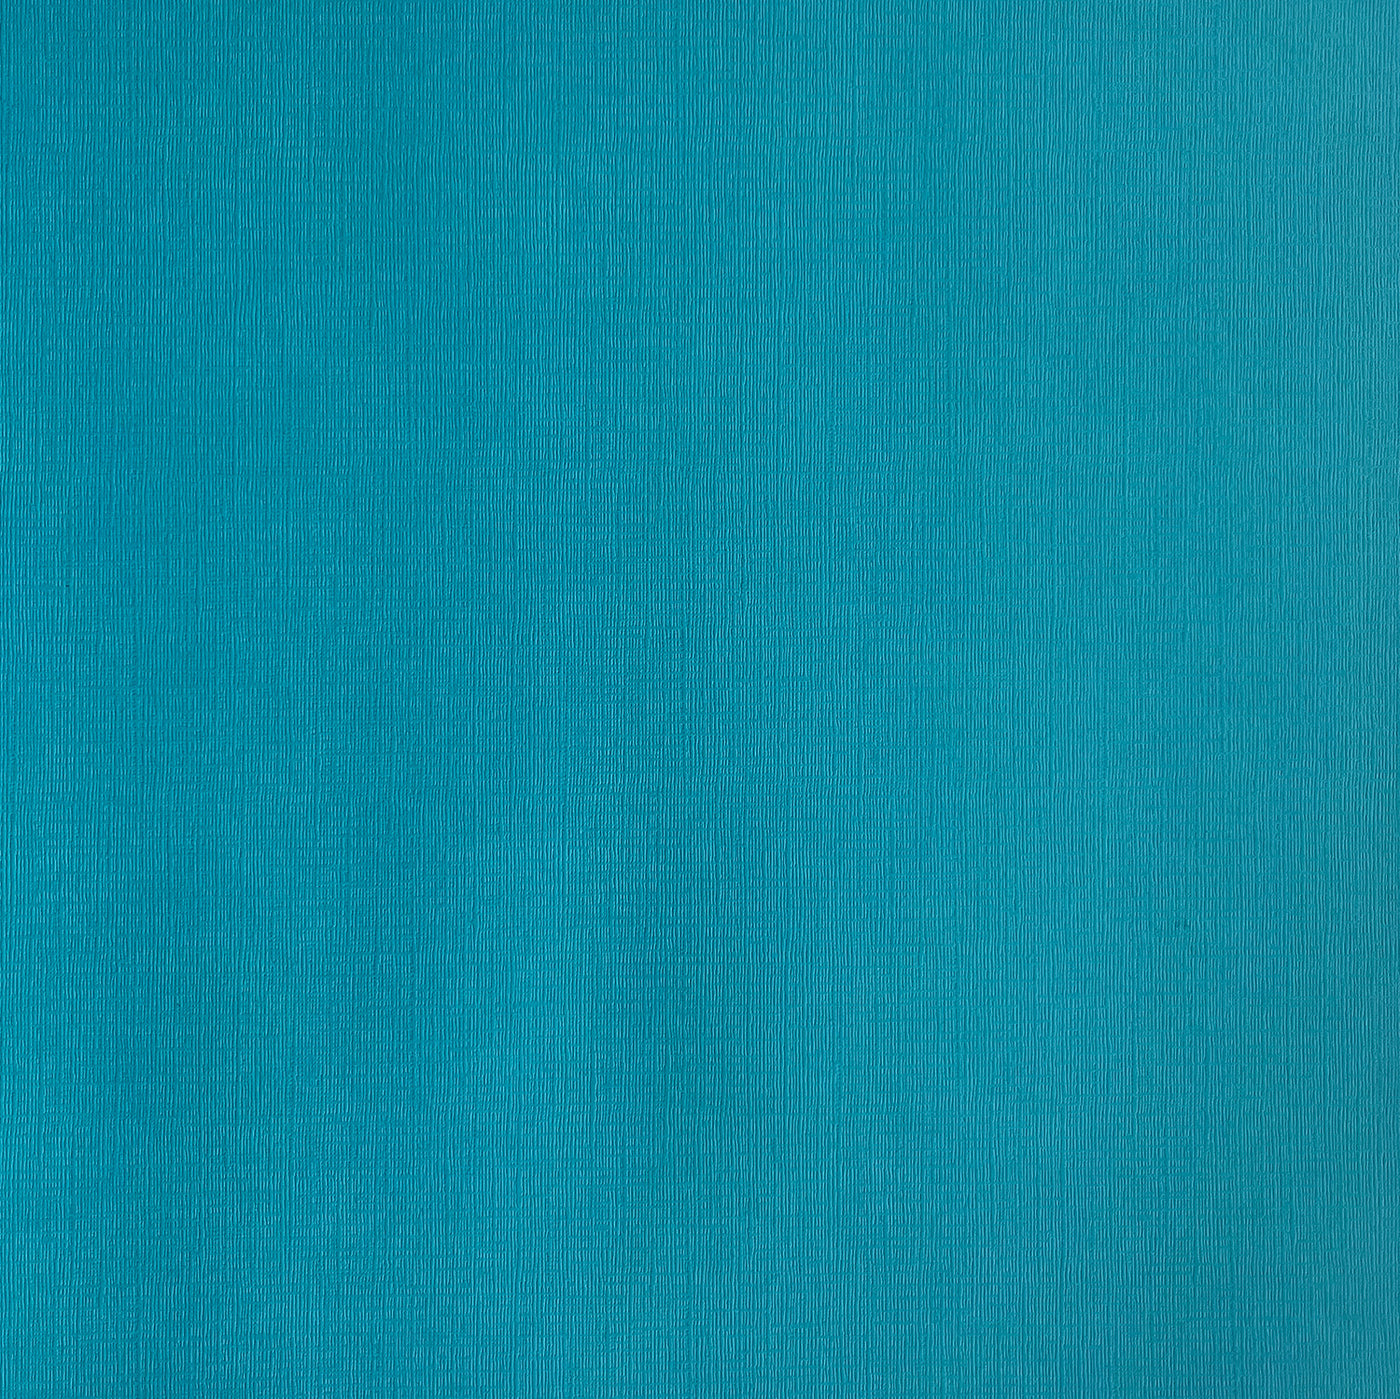 Poolside - Textured 12x12 Cardstock - Electric blue canvas scrapbook paper